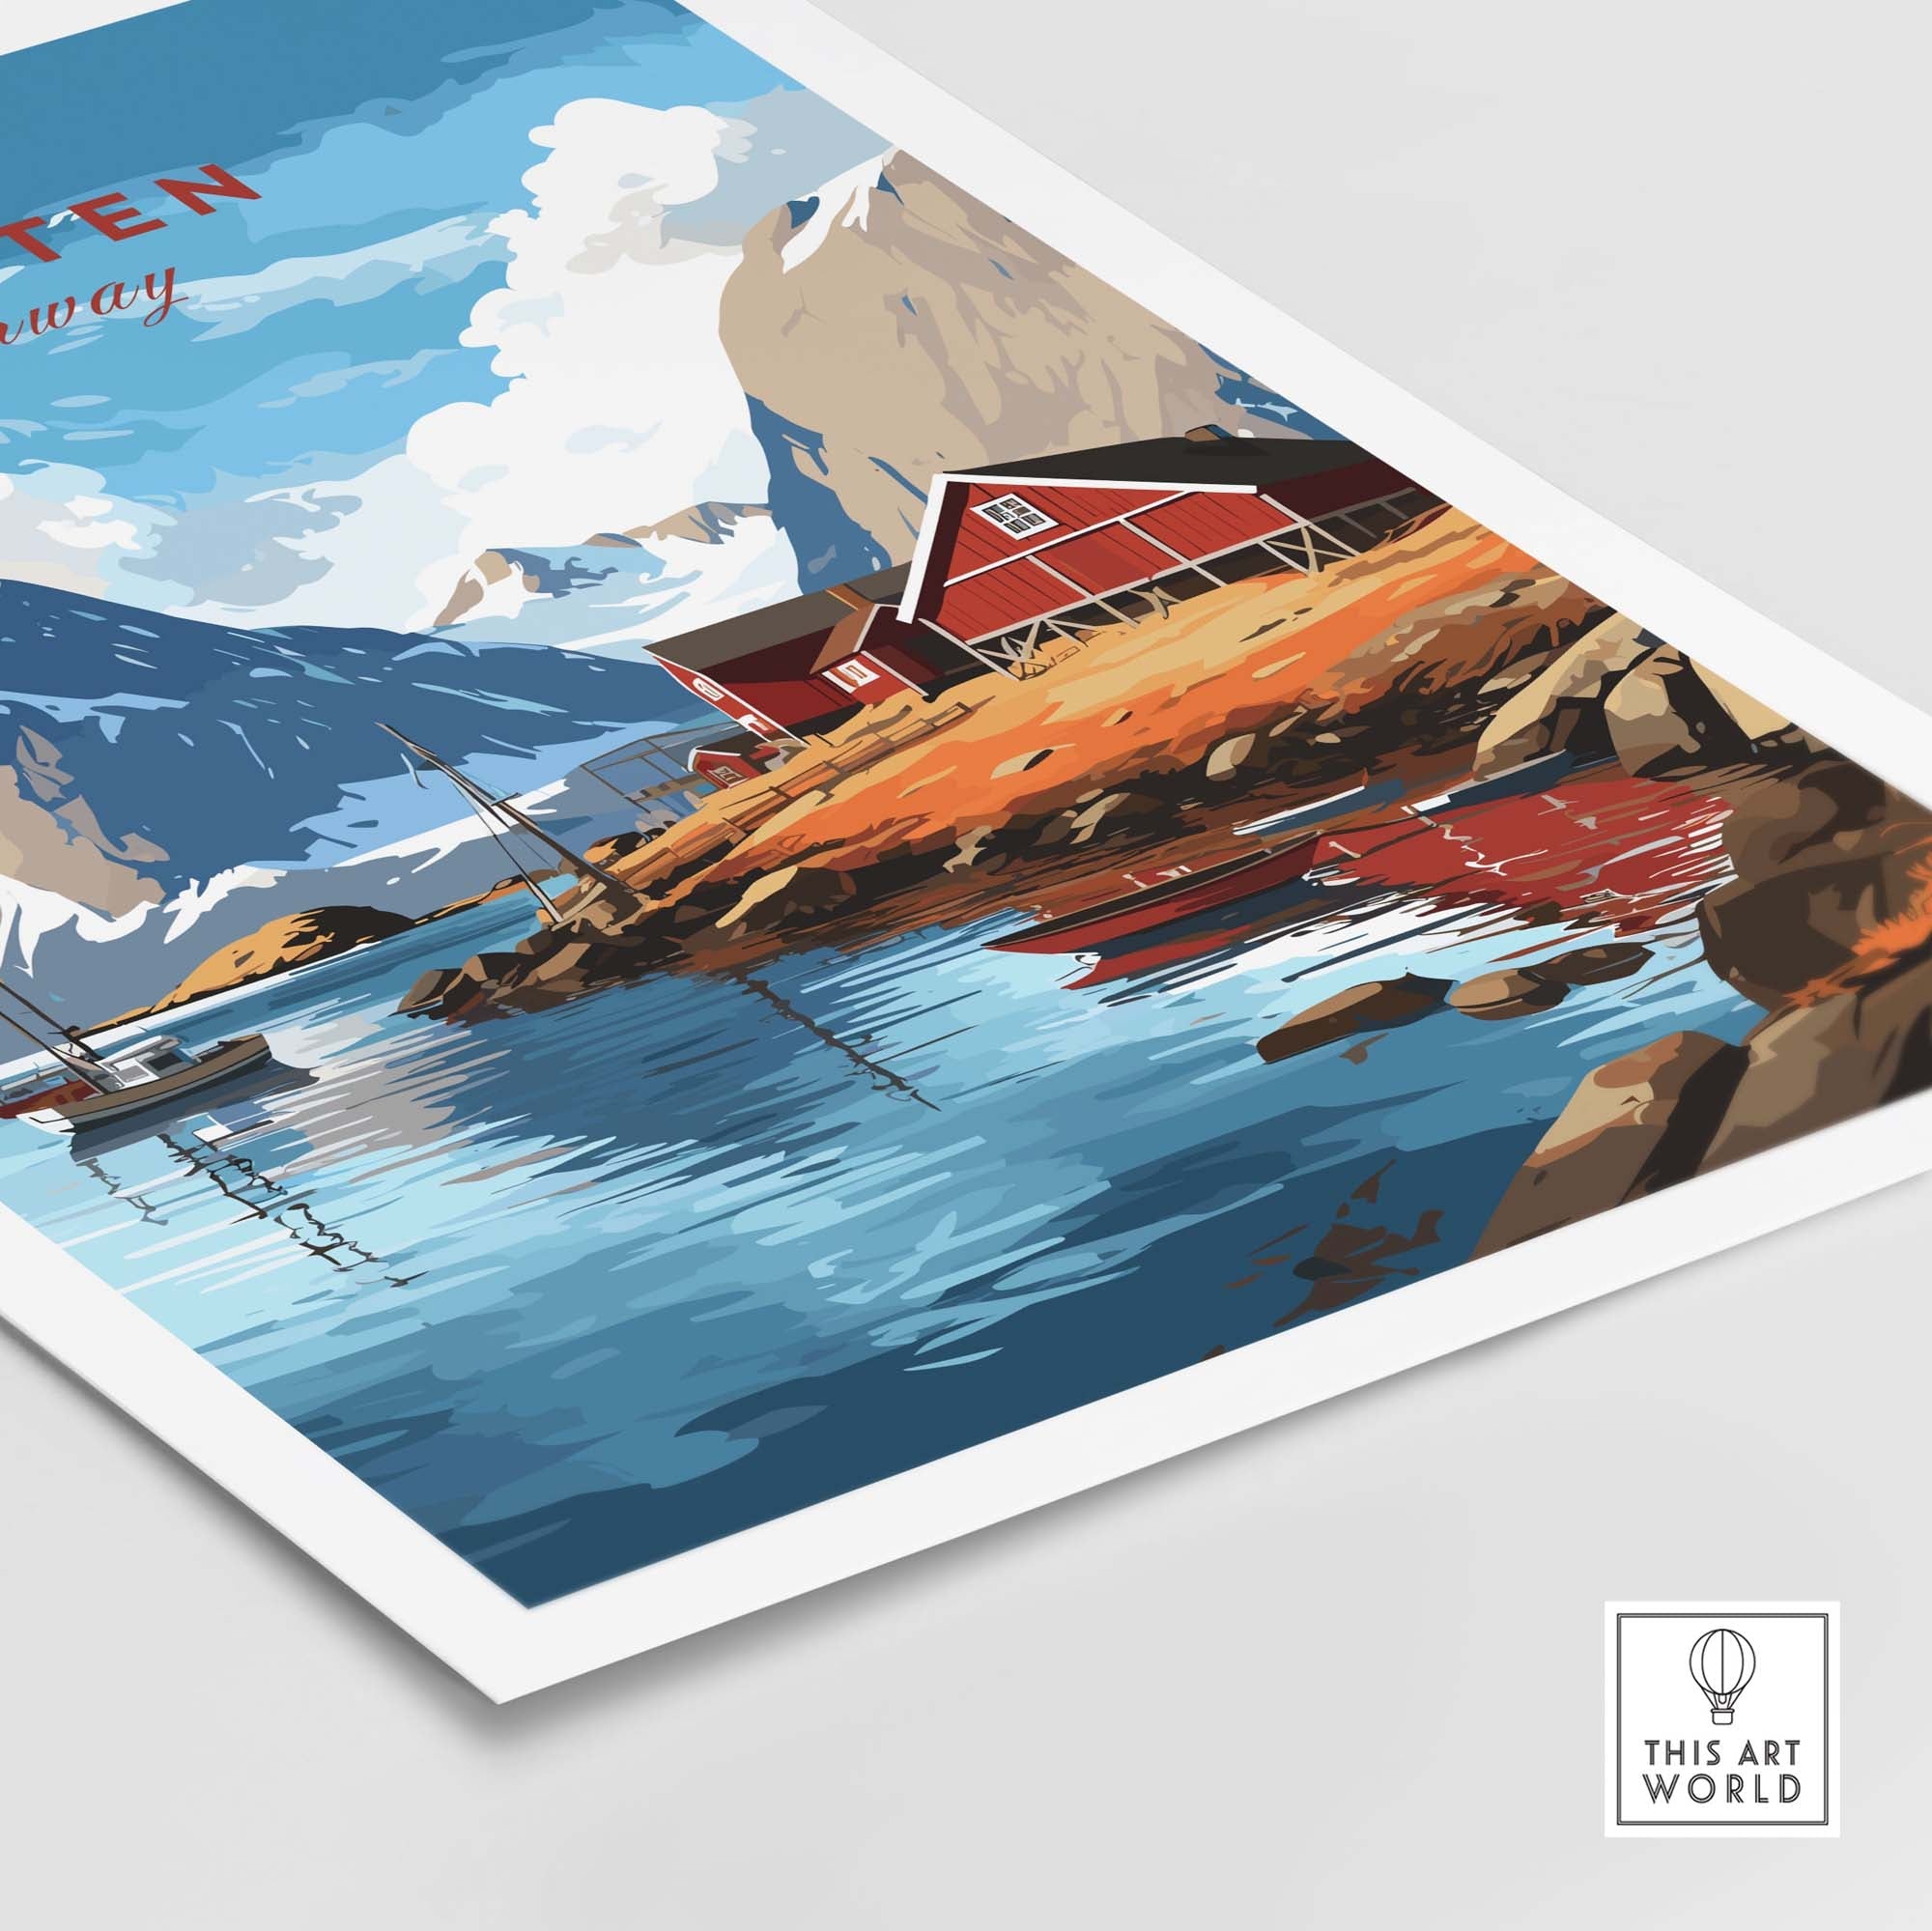 Lofoten Islands Poster